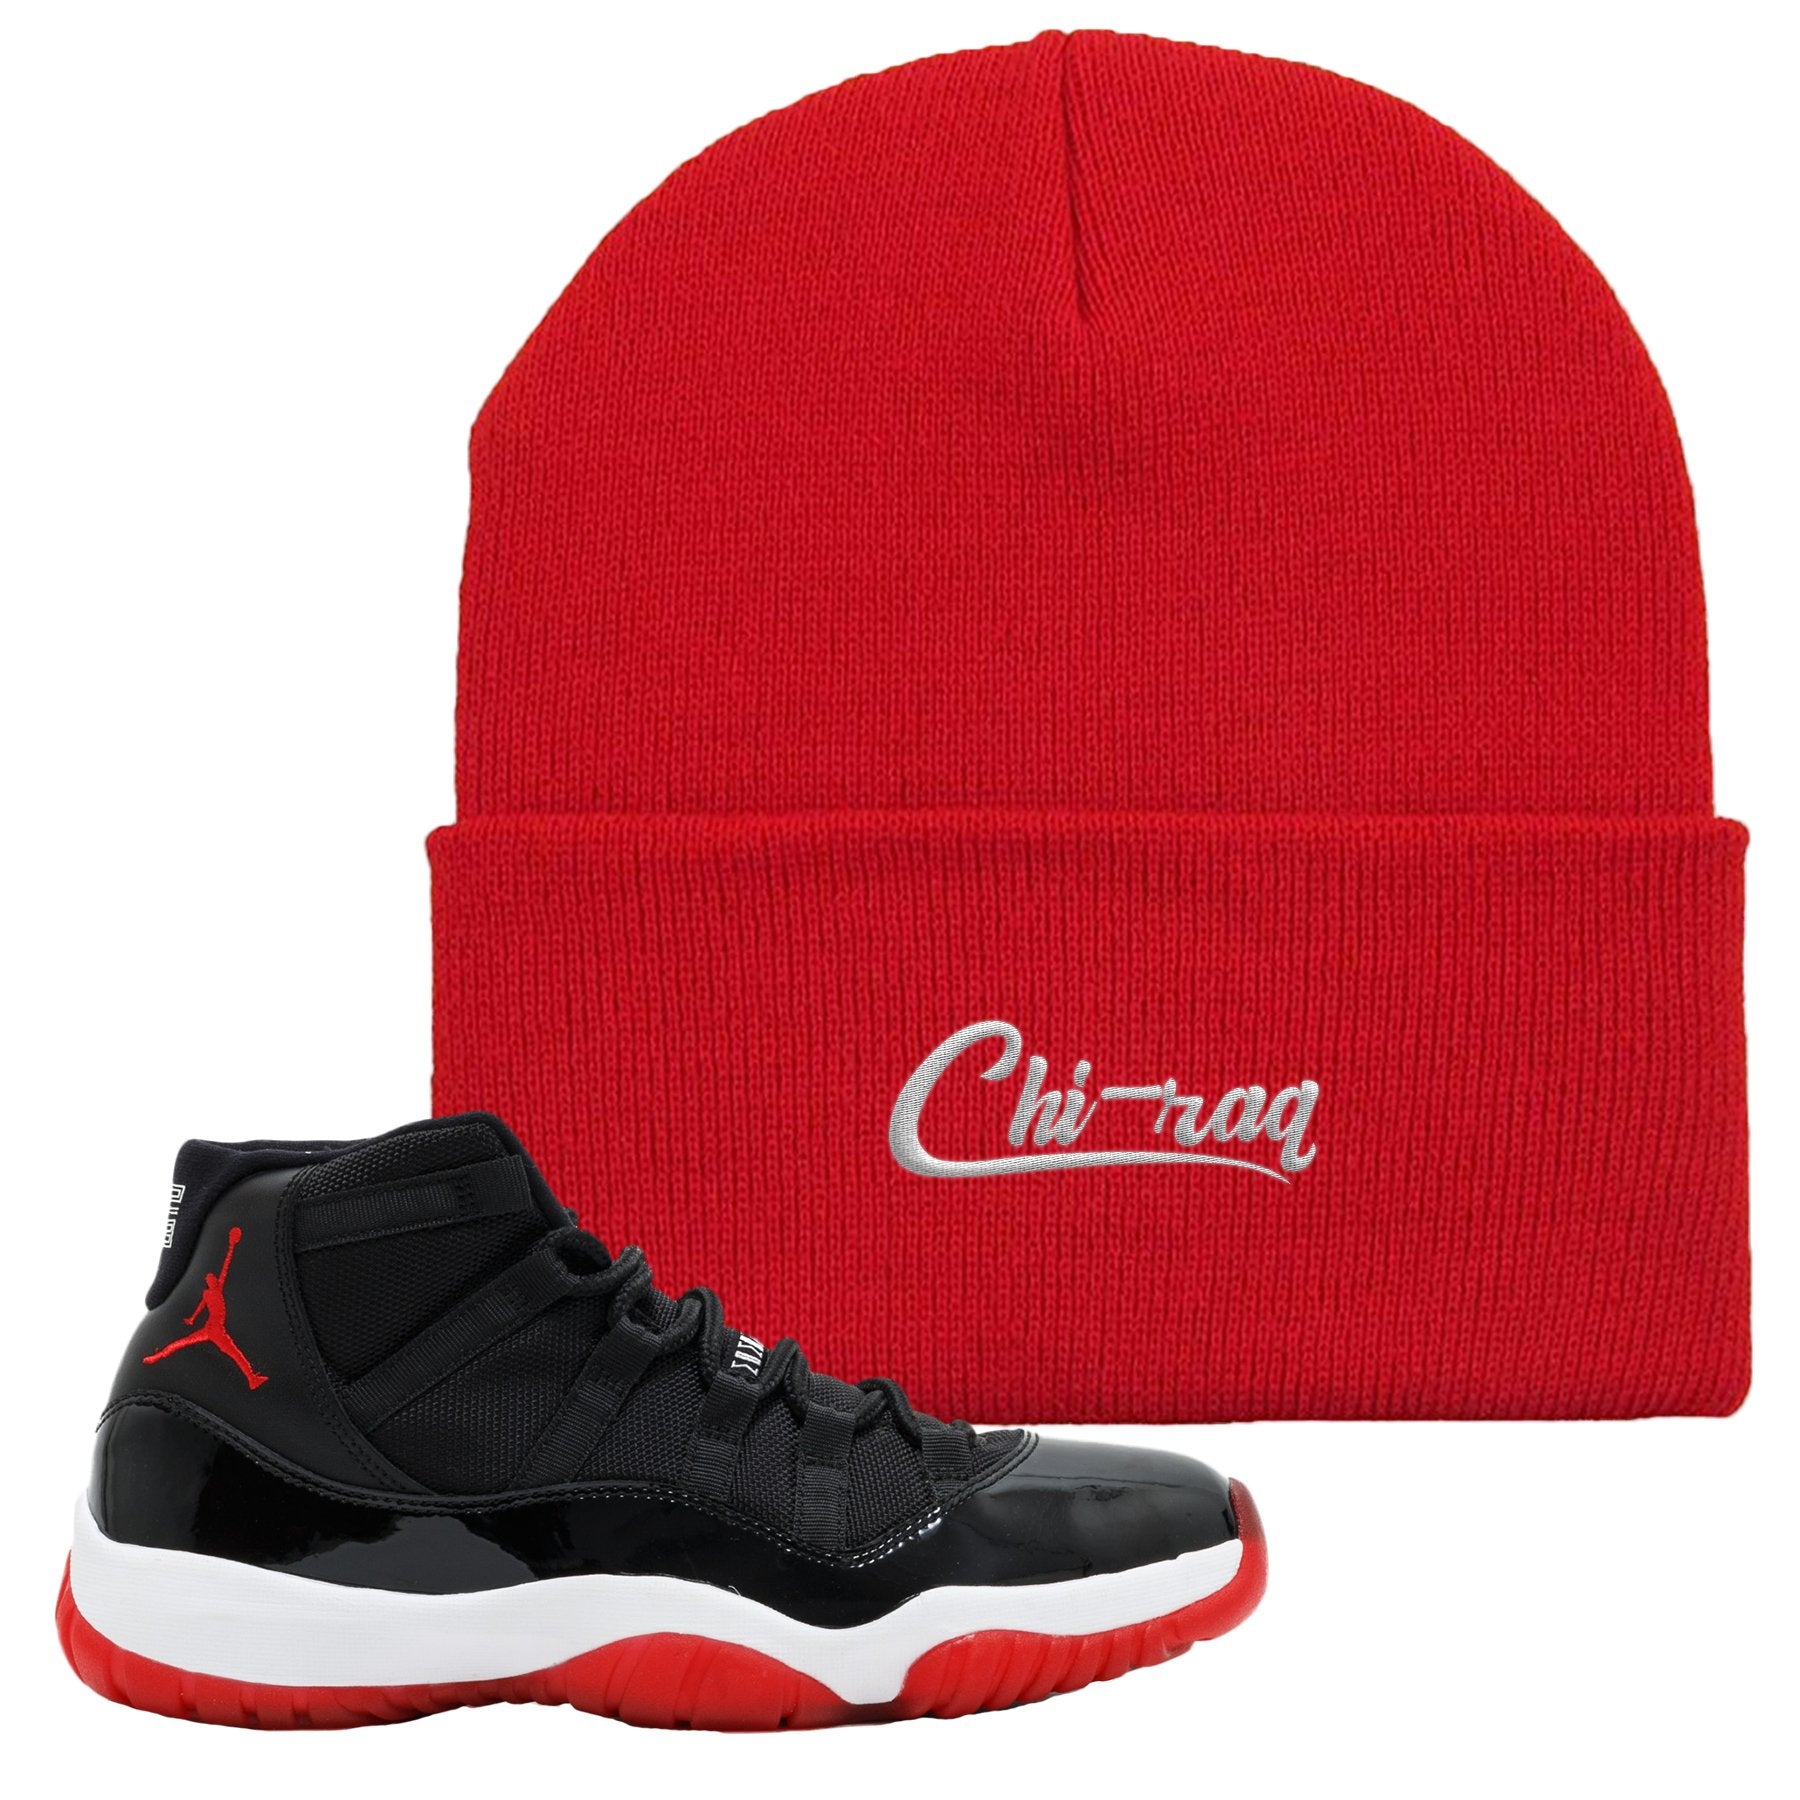 Jordan 11 Bred Chi-raq Red Sneaker Hook Up Beanie